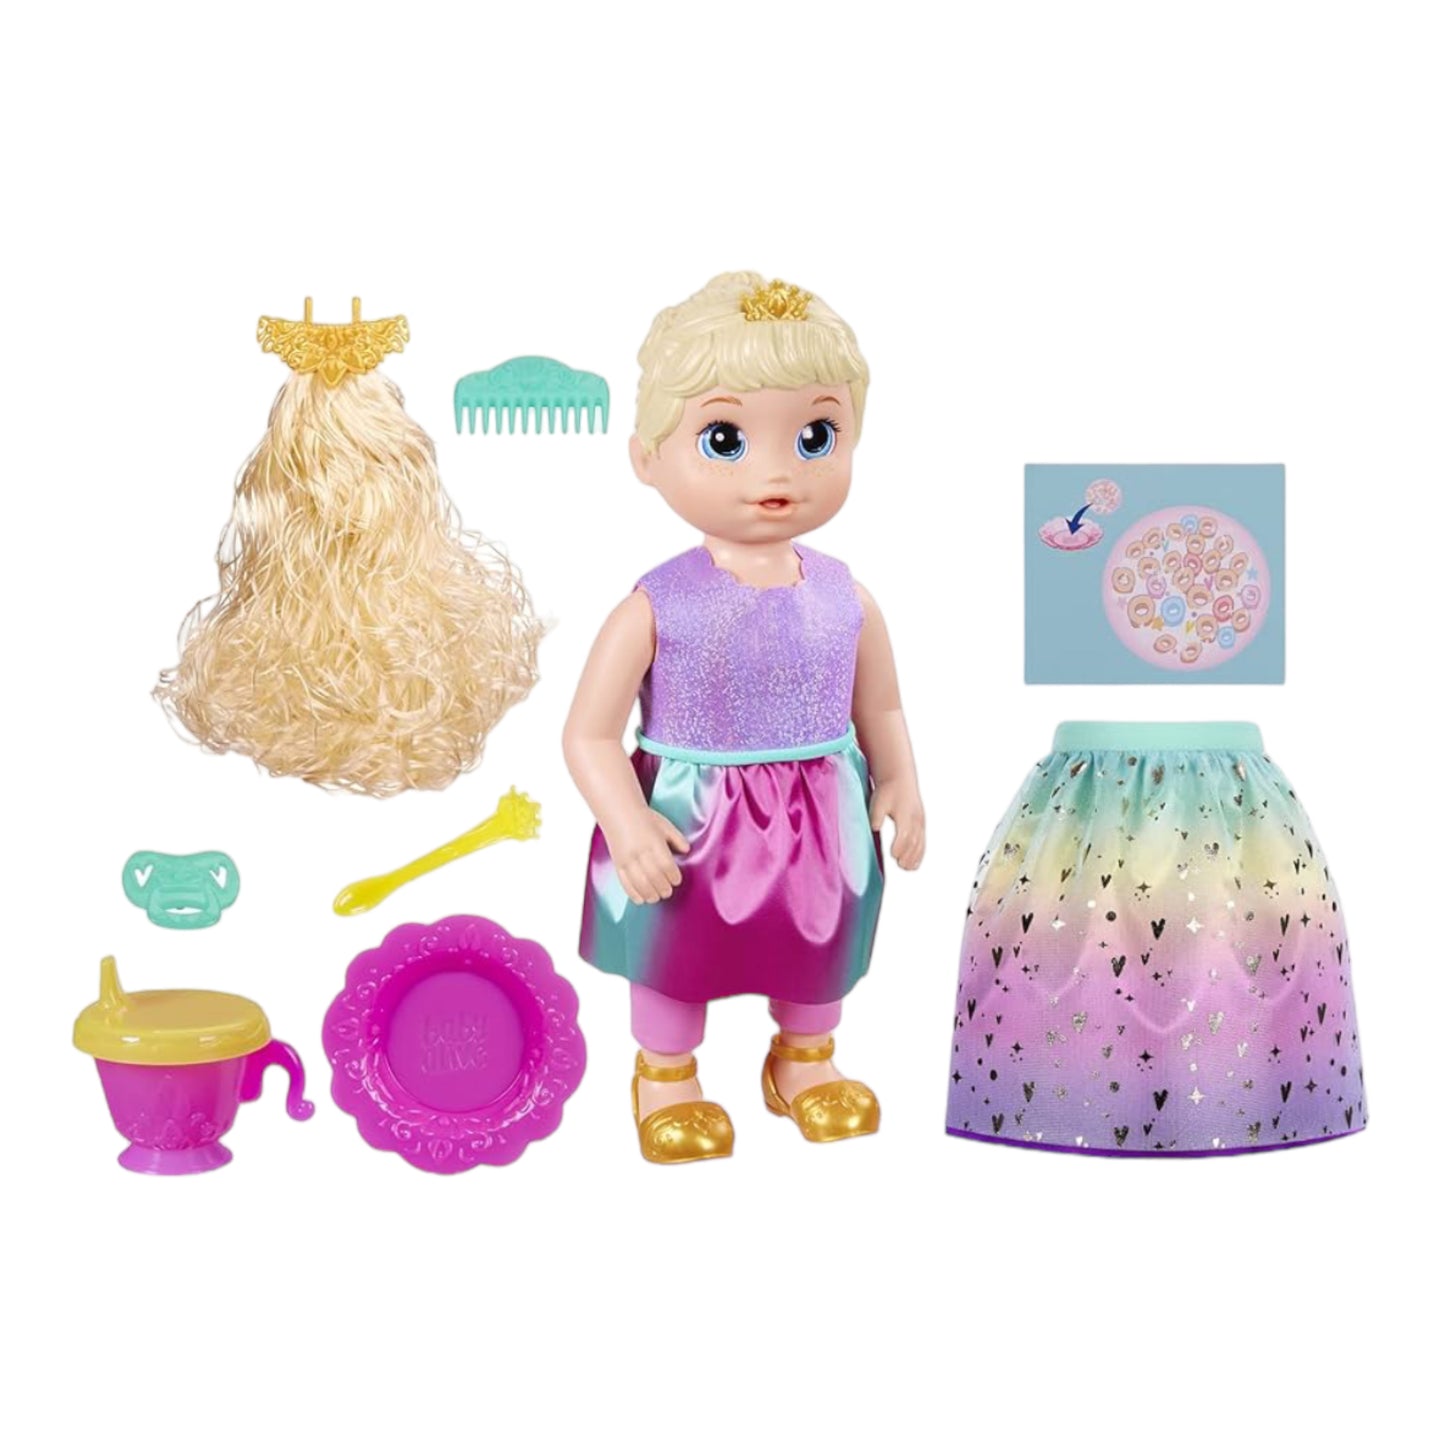 Baby Alive Princesa Ellie Grows Up Hasbro